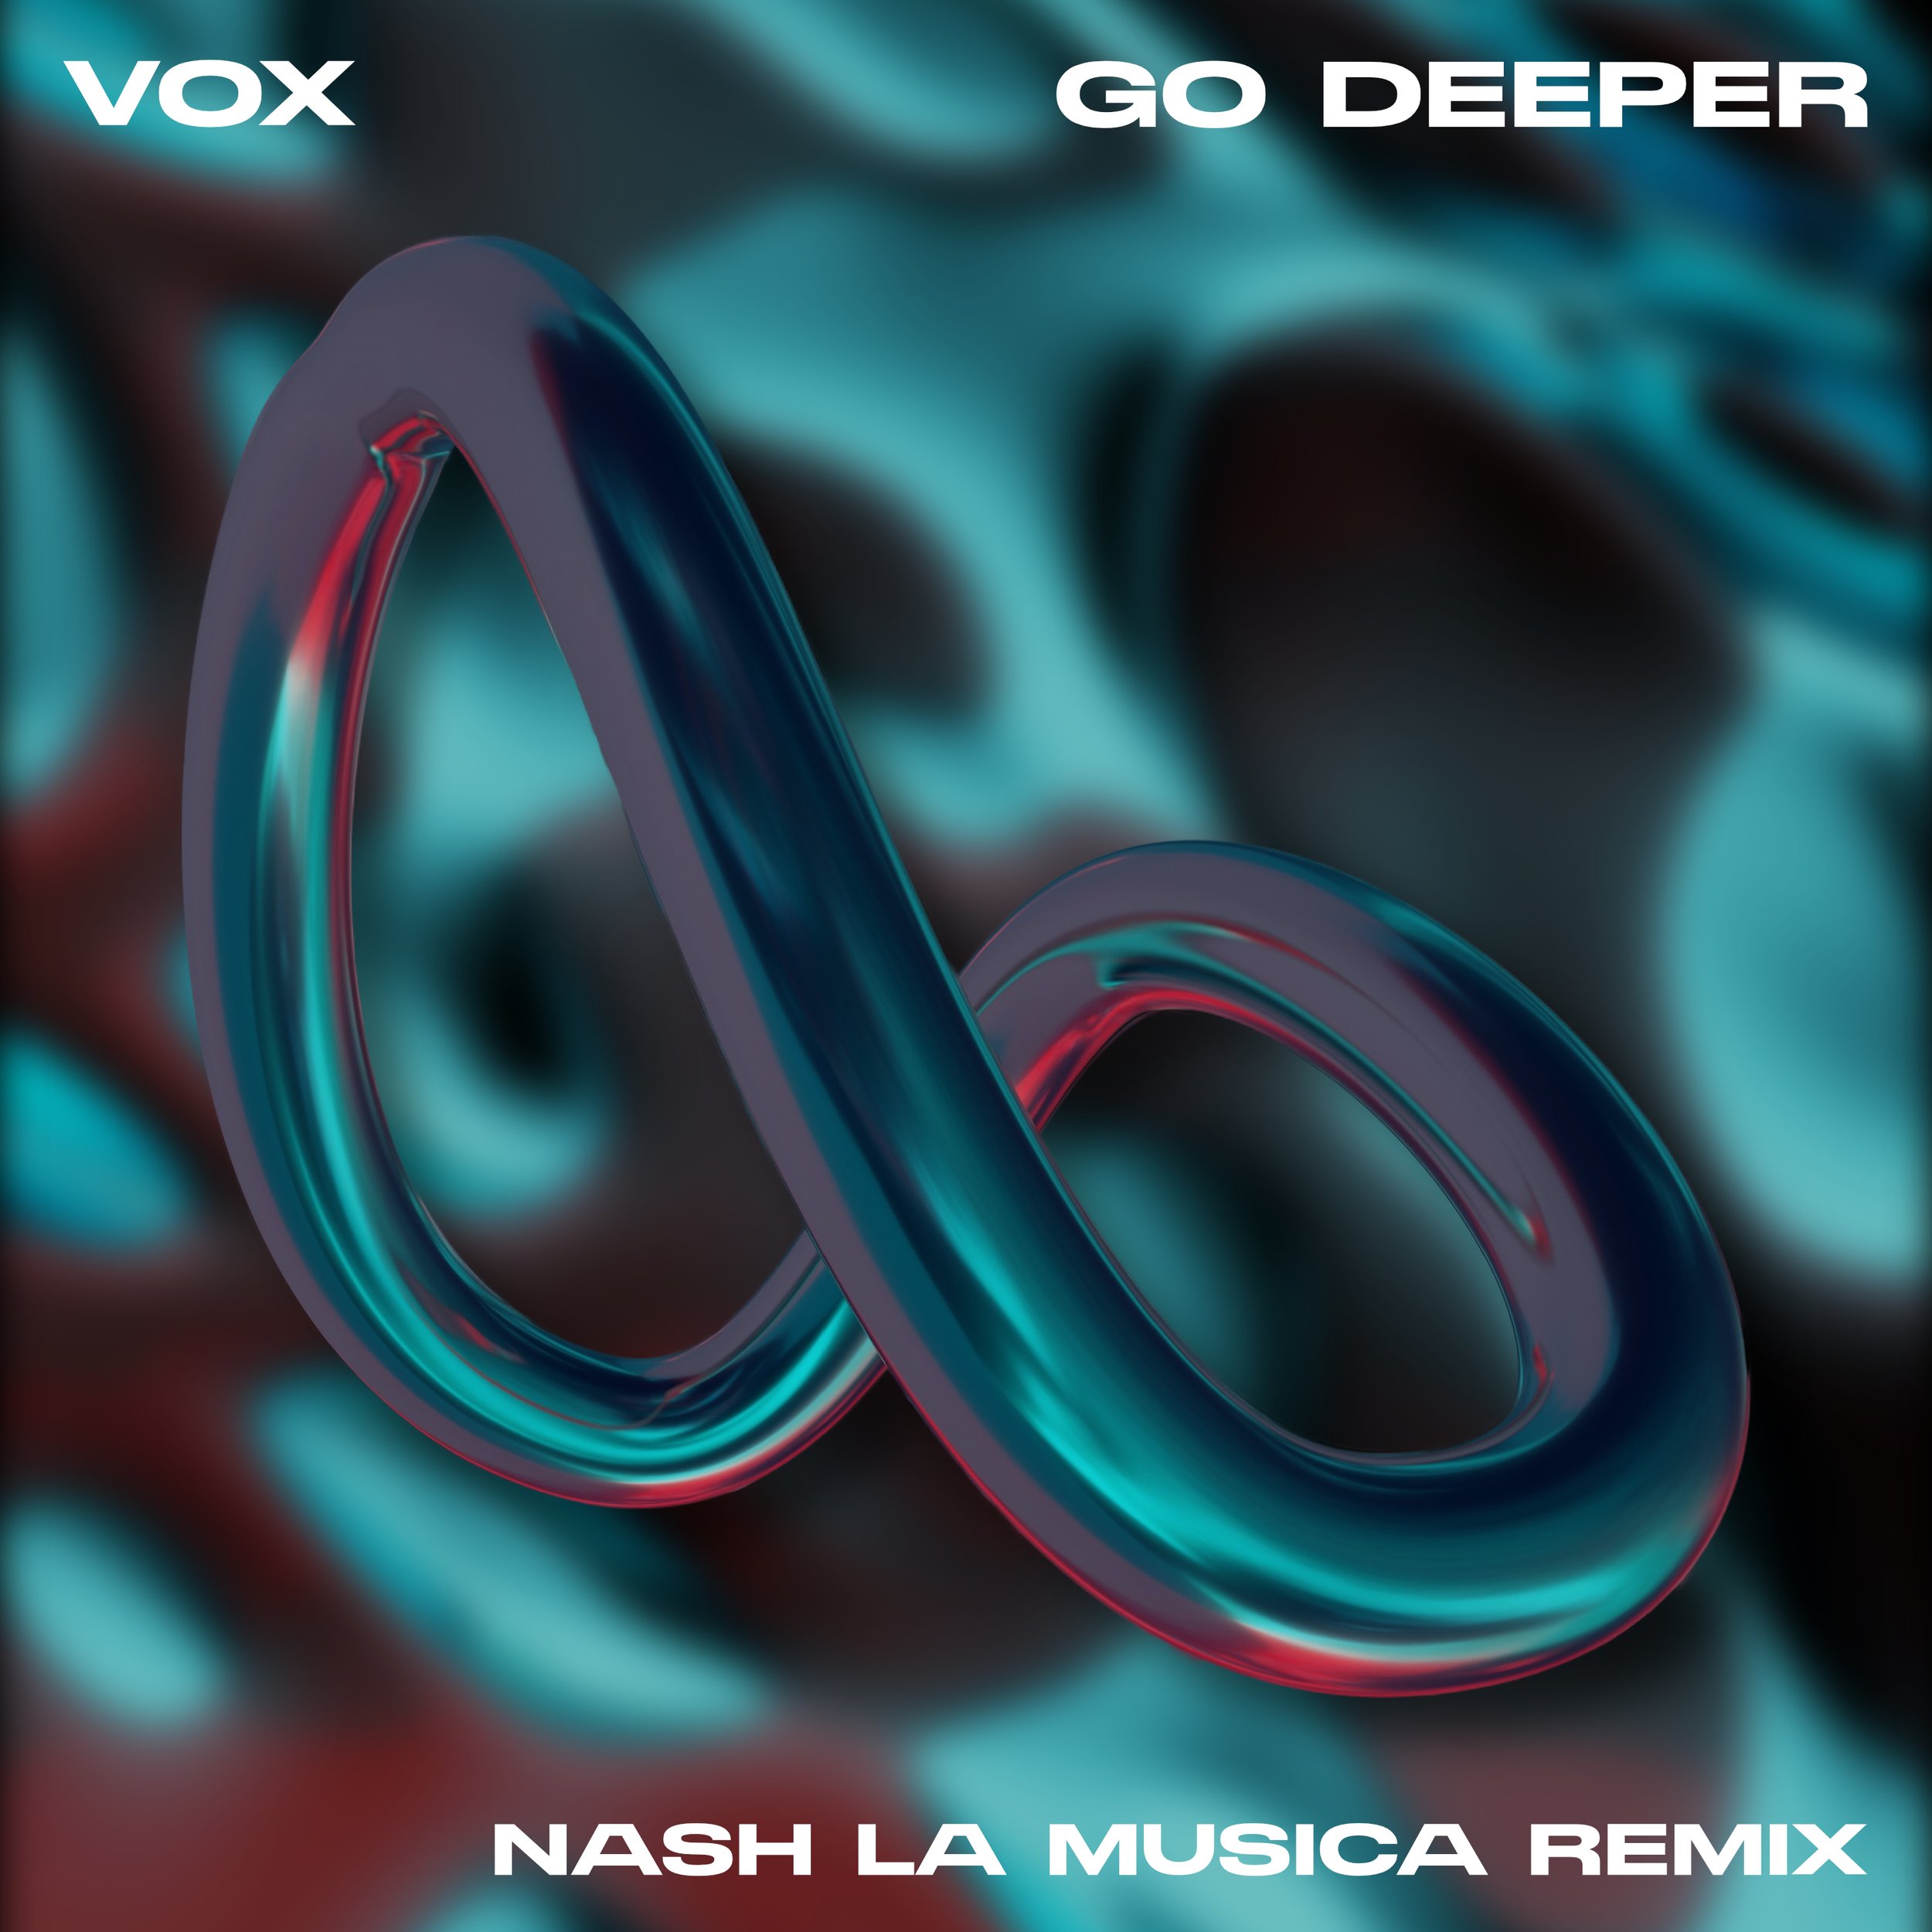 VOX - Go Deeper (NLM remix) - Artwork 2 (2).jpg